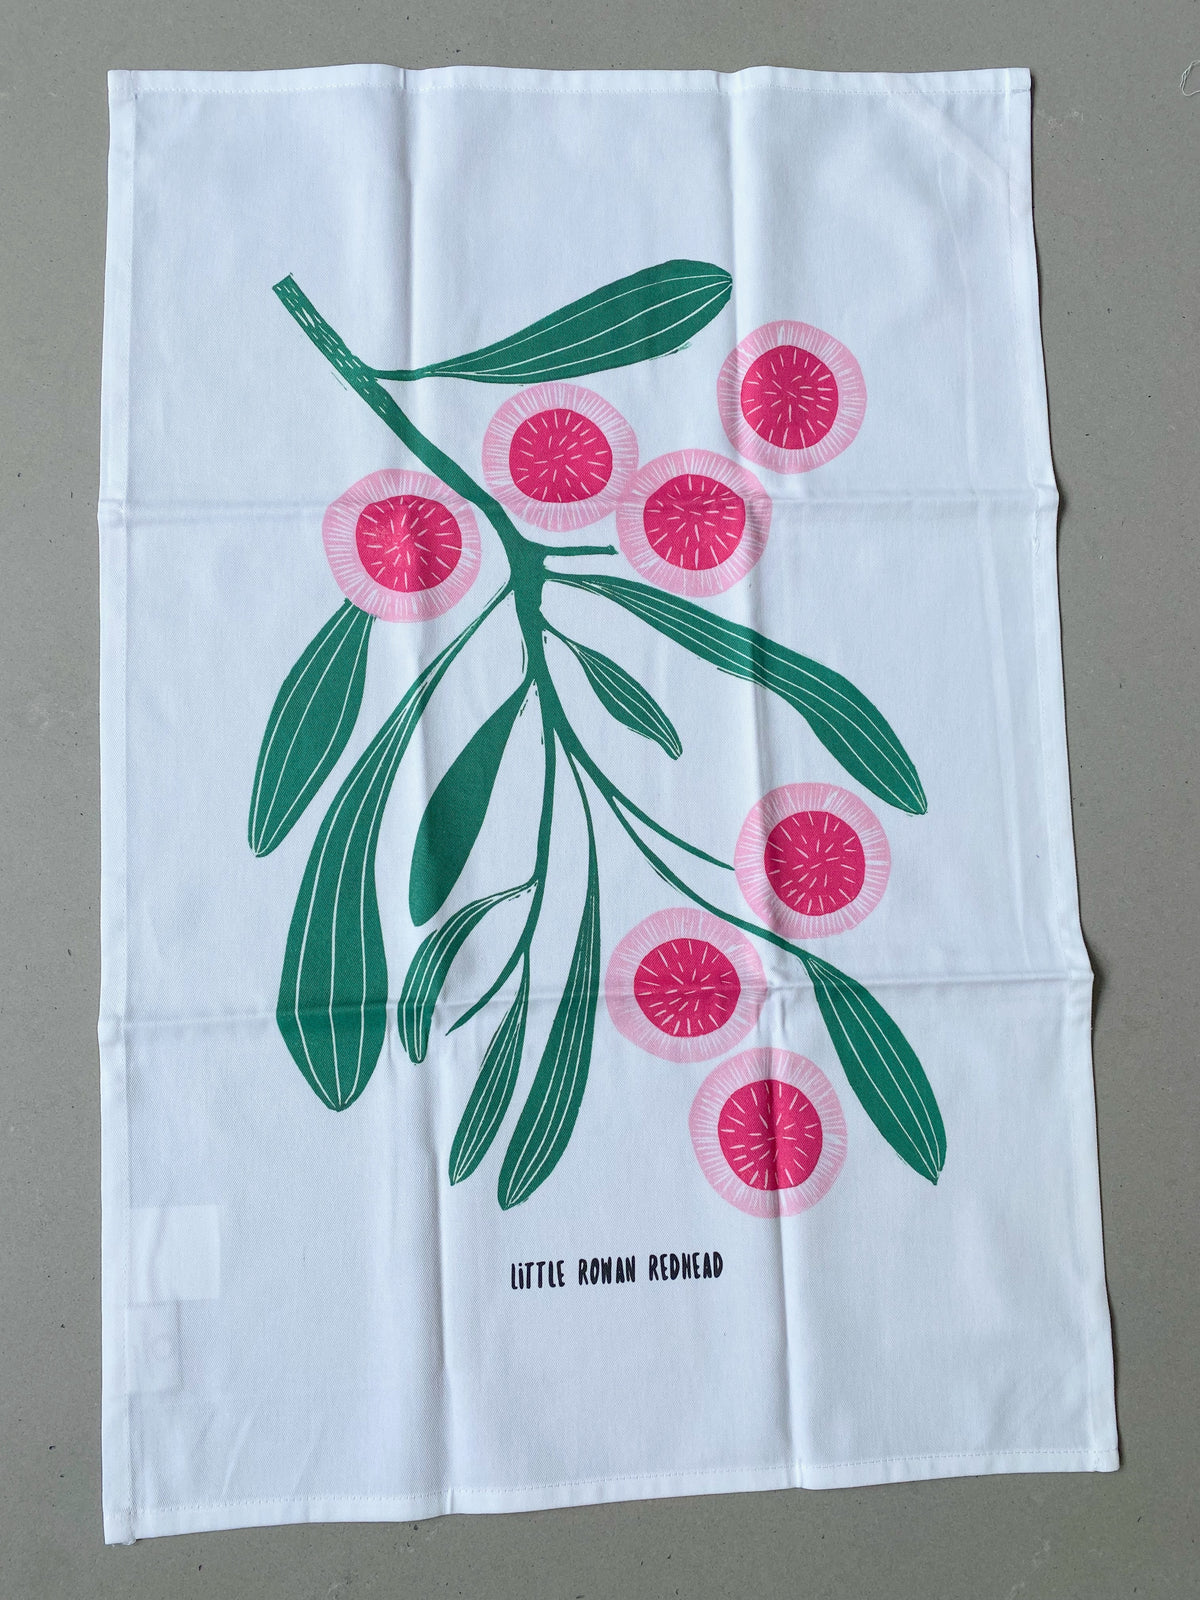 Organic cotton tea towel - Hakea Laurina